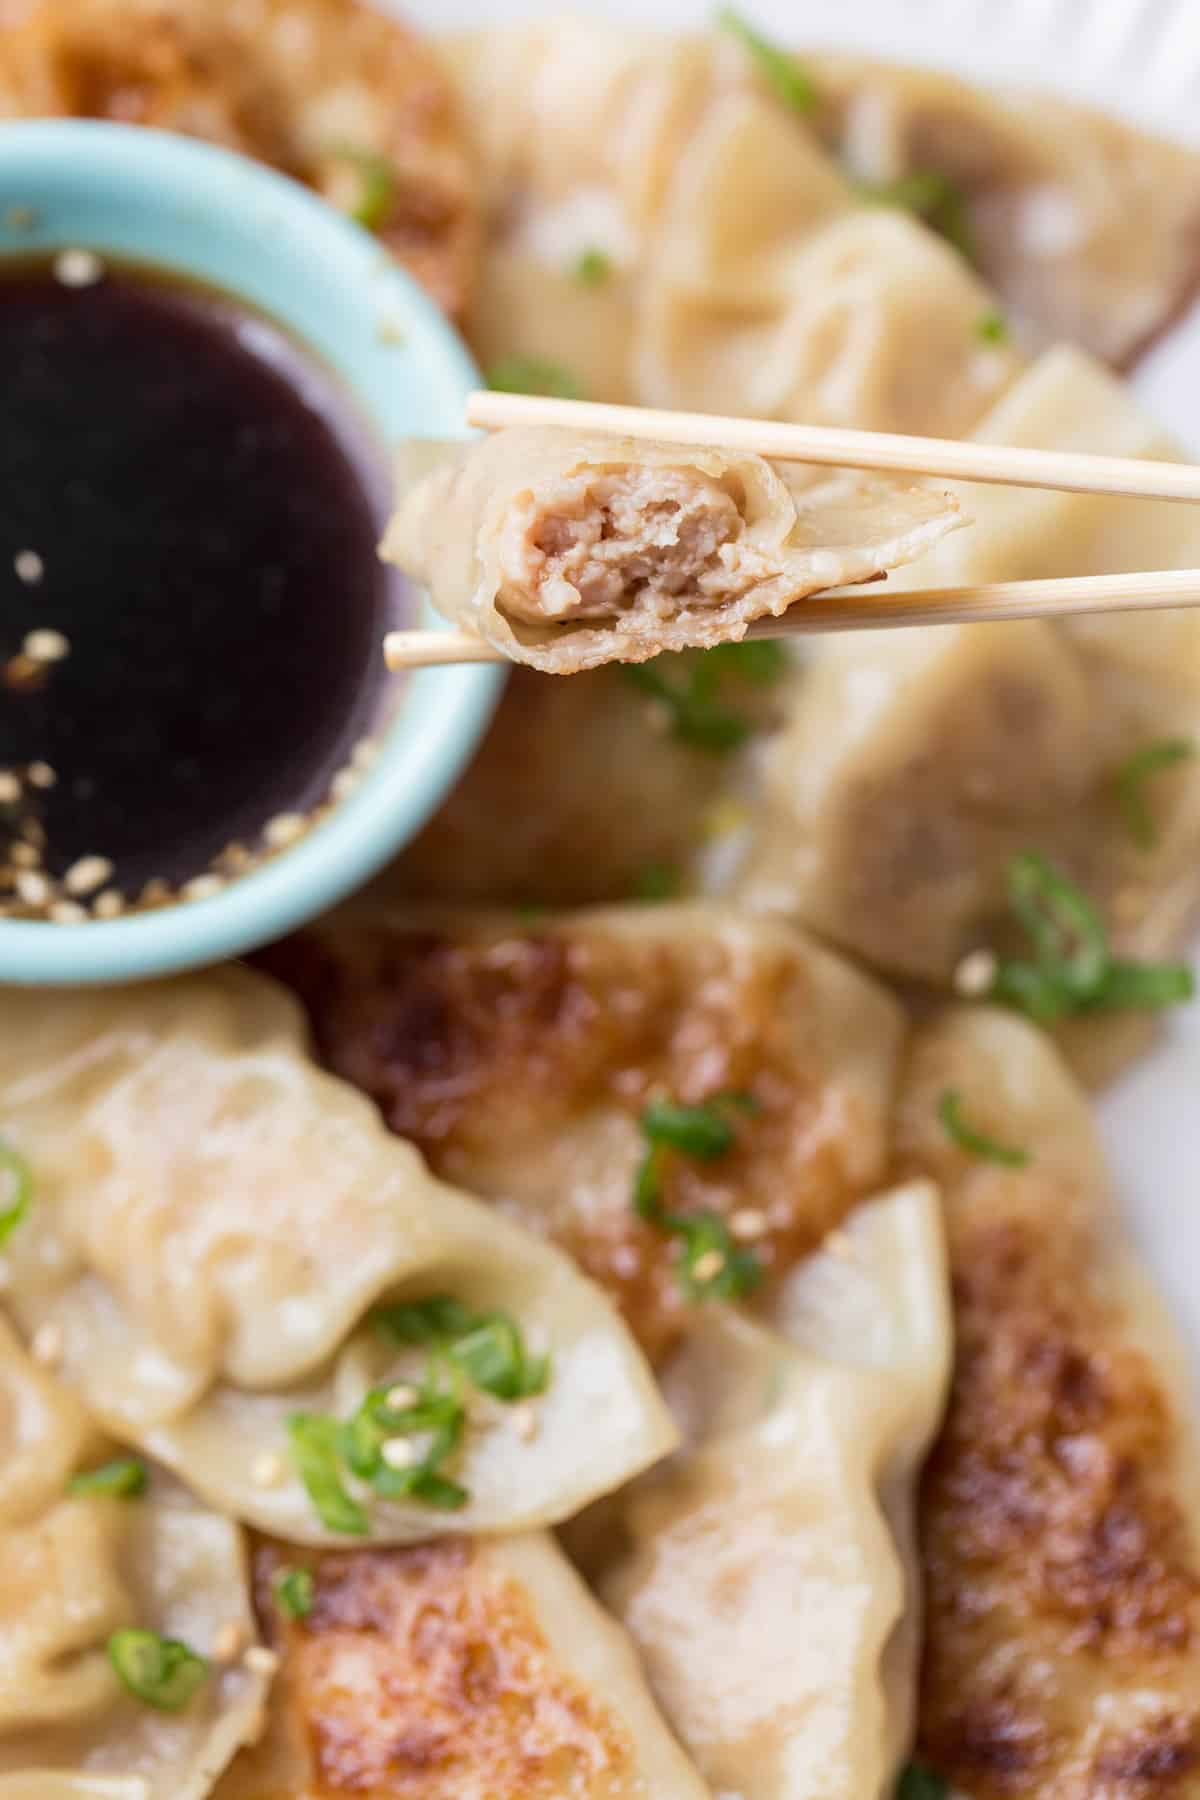 Biten into dumpling in chopsticks next to a bowl of gyozas with dipping sauce. 